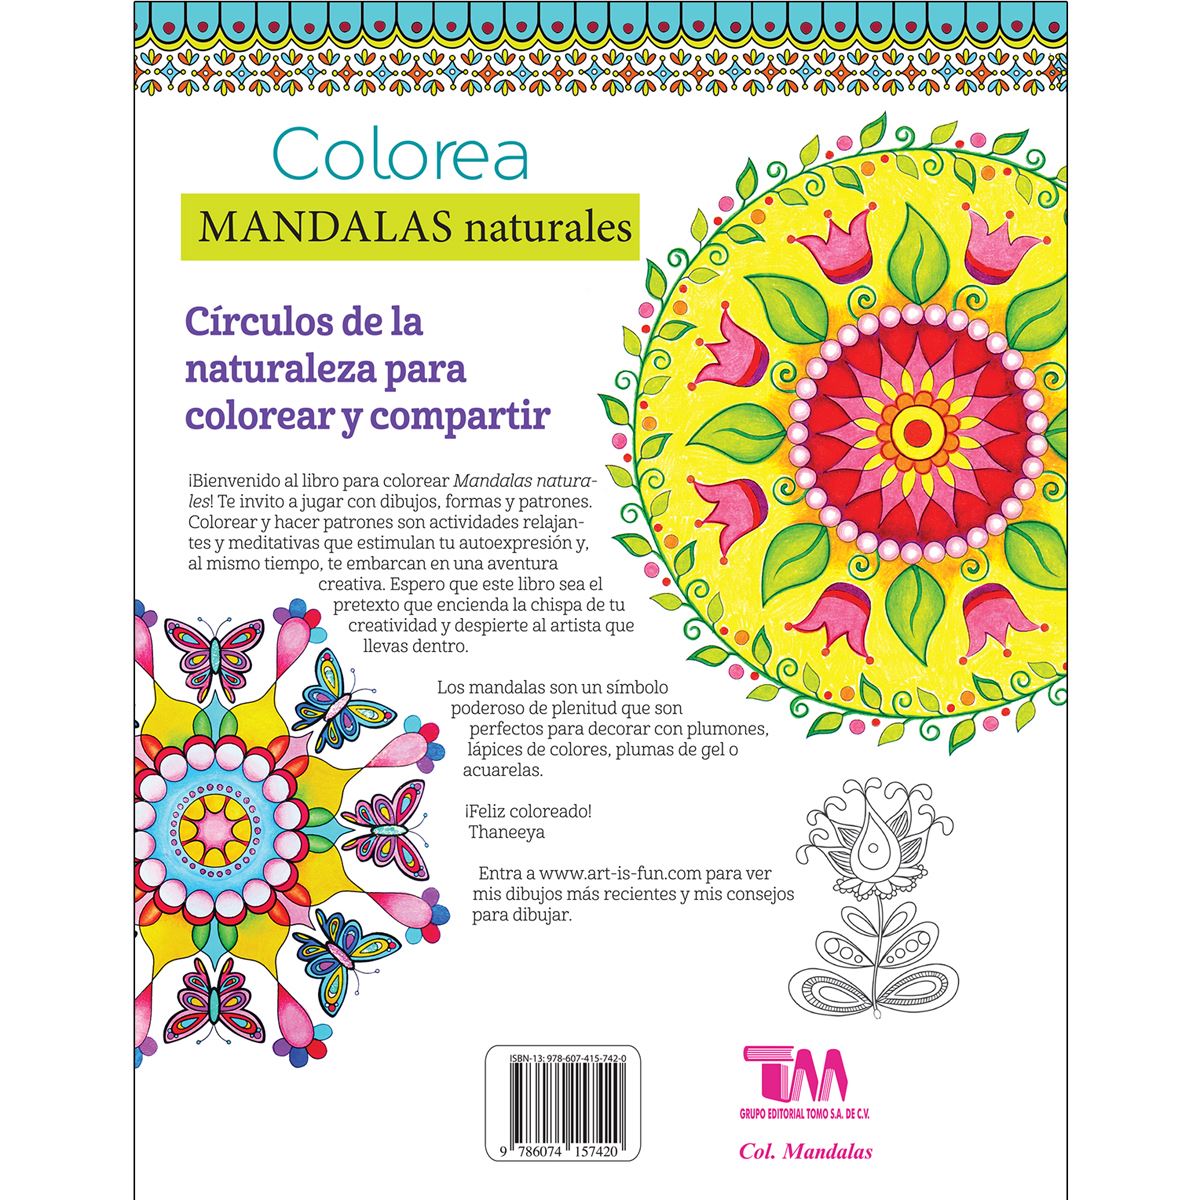 Colorea Mandalas Naturales